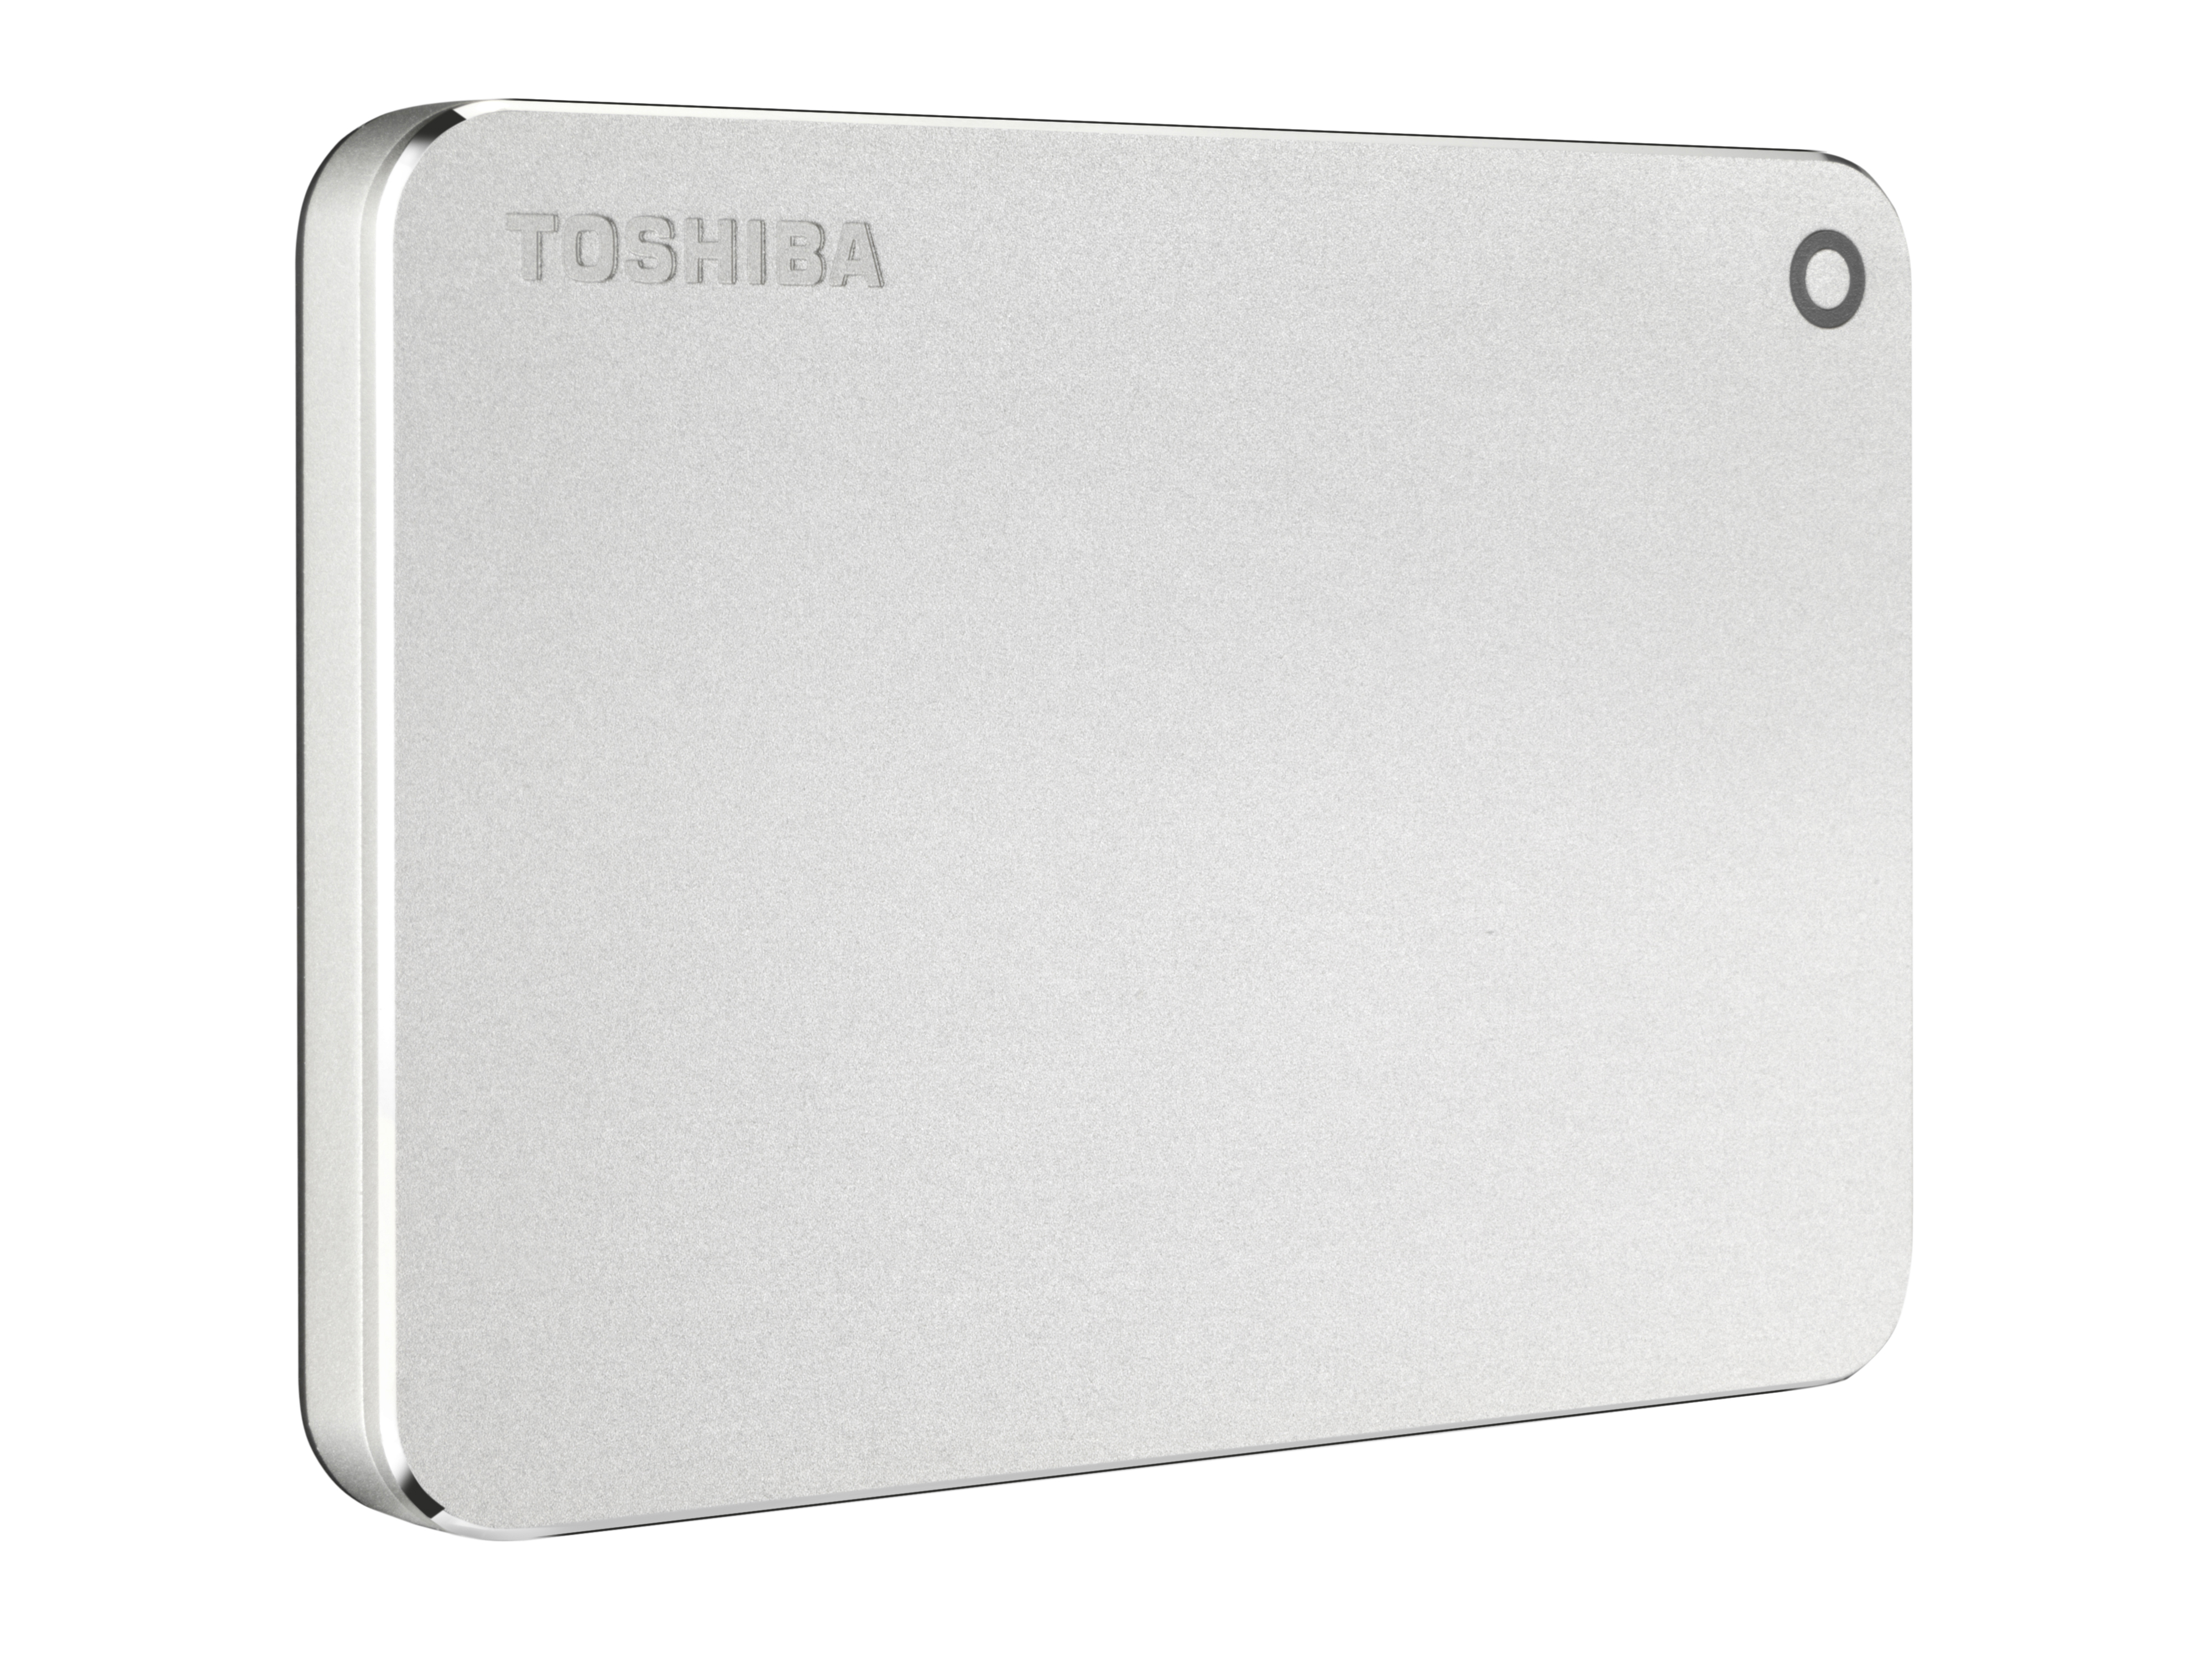 HDD, 1 extern, 2,5 TB Canvio Premium TOSHIBA Zoll, Silber Festplatte,